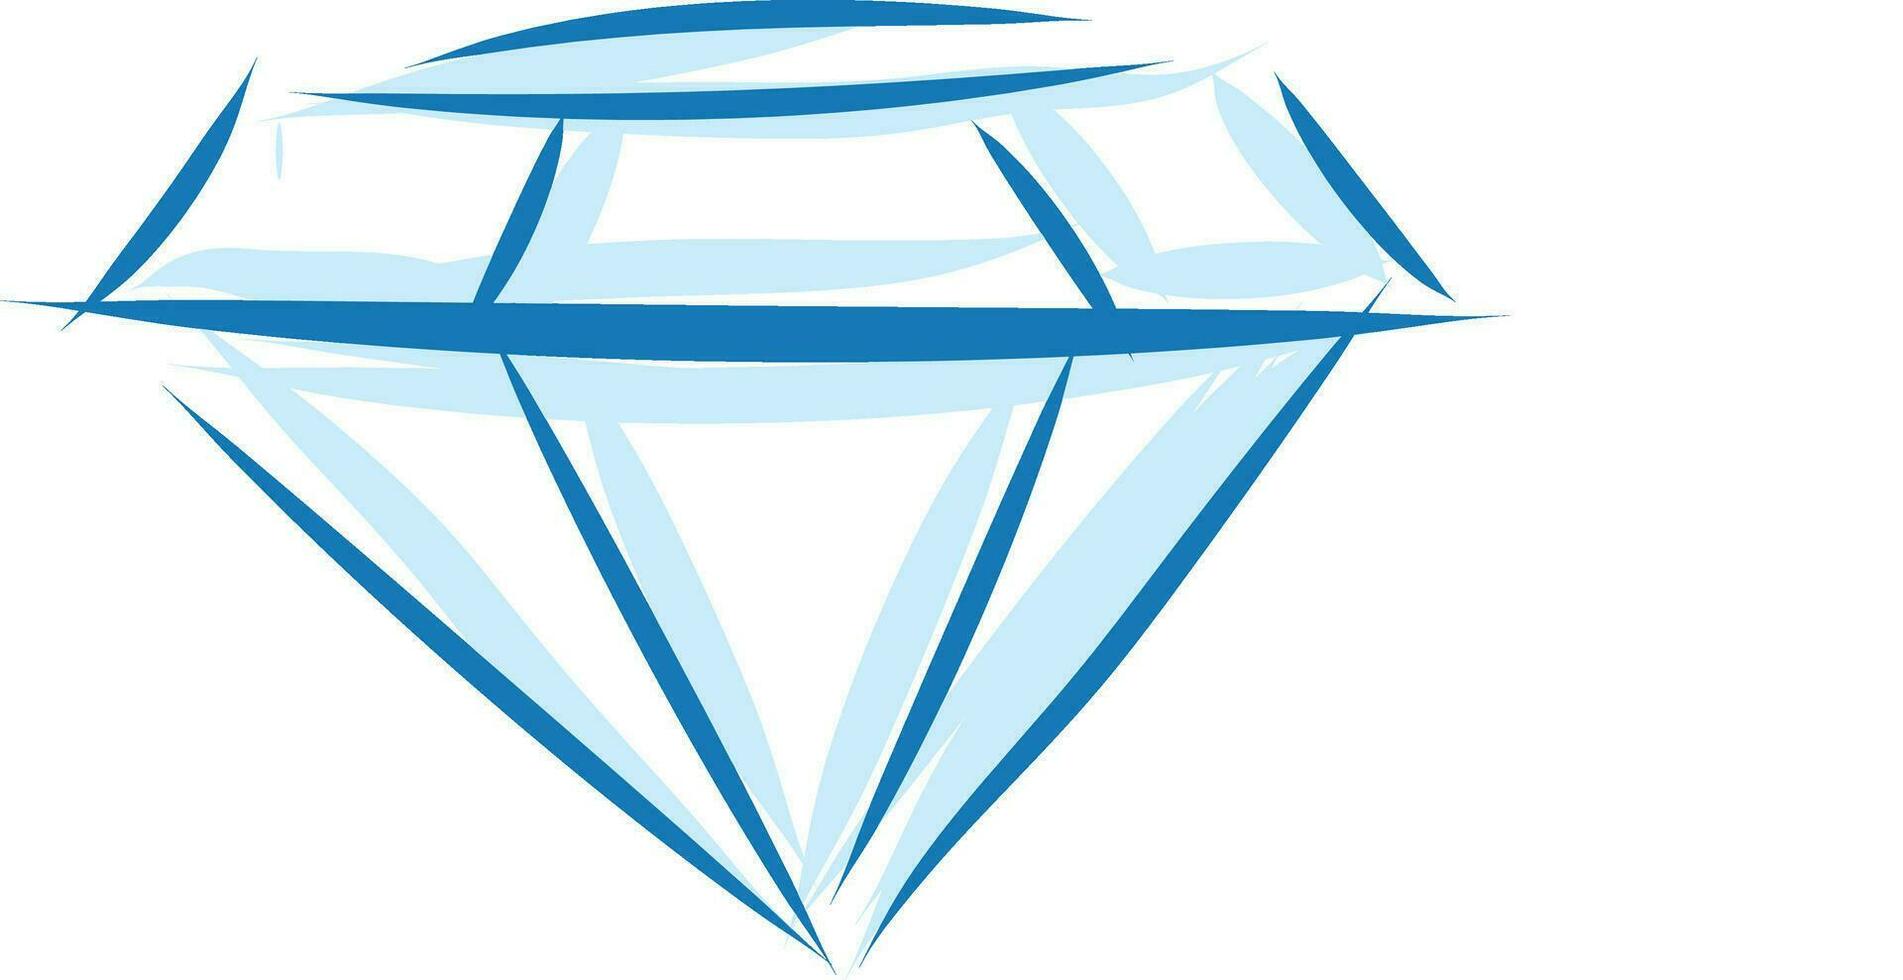 Blue diamond 3D, vector or color illustration.